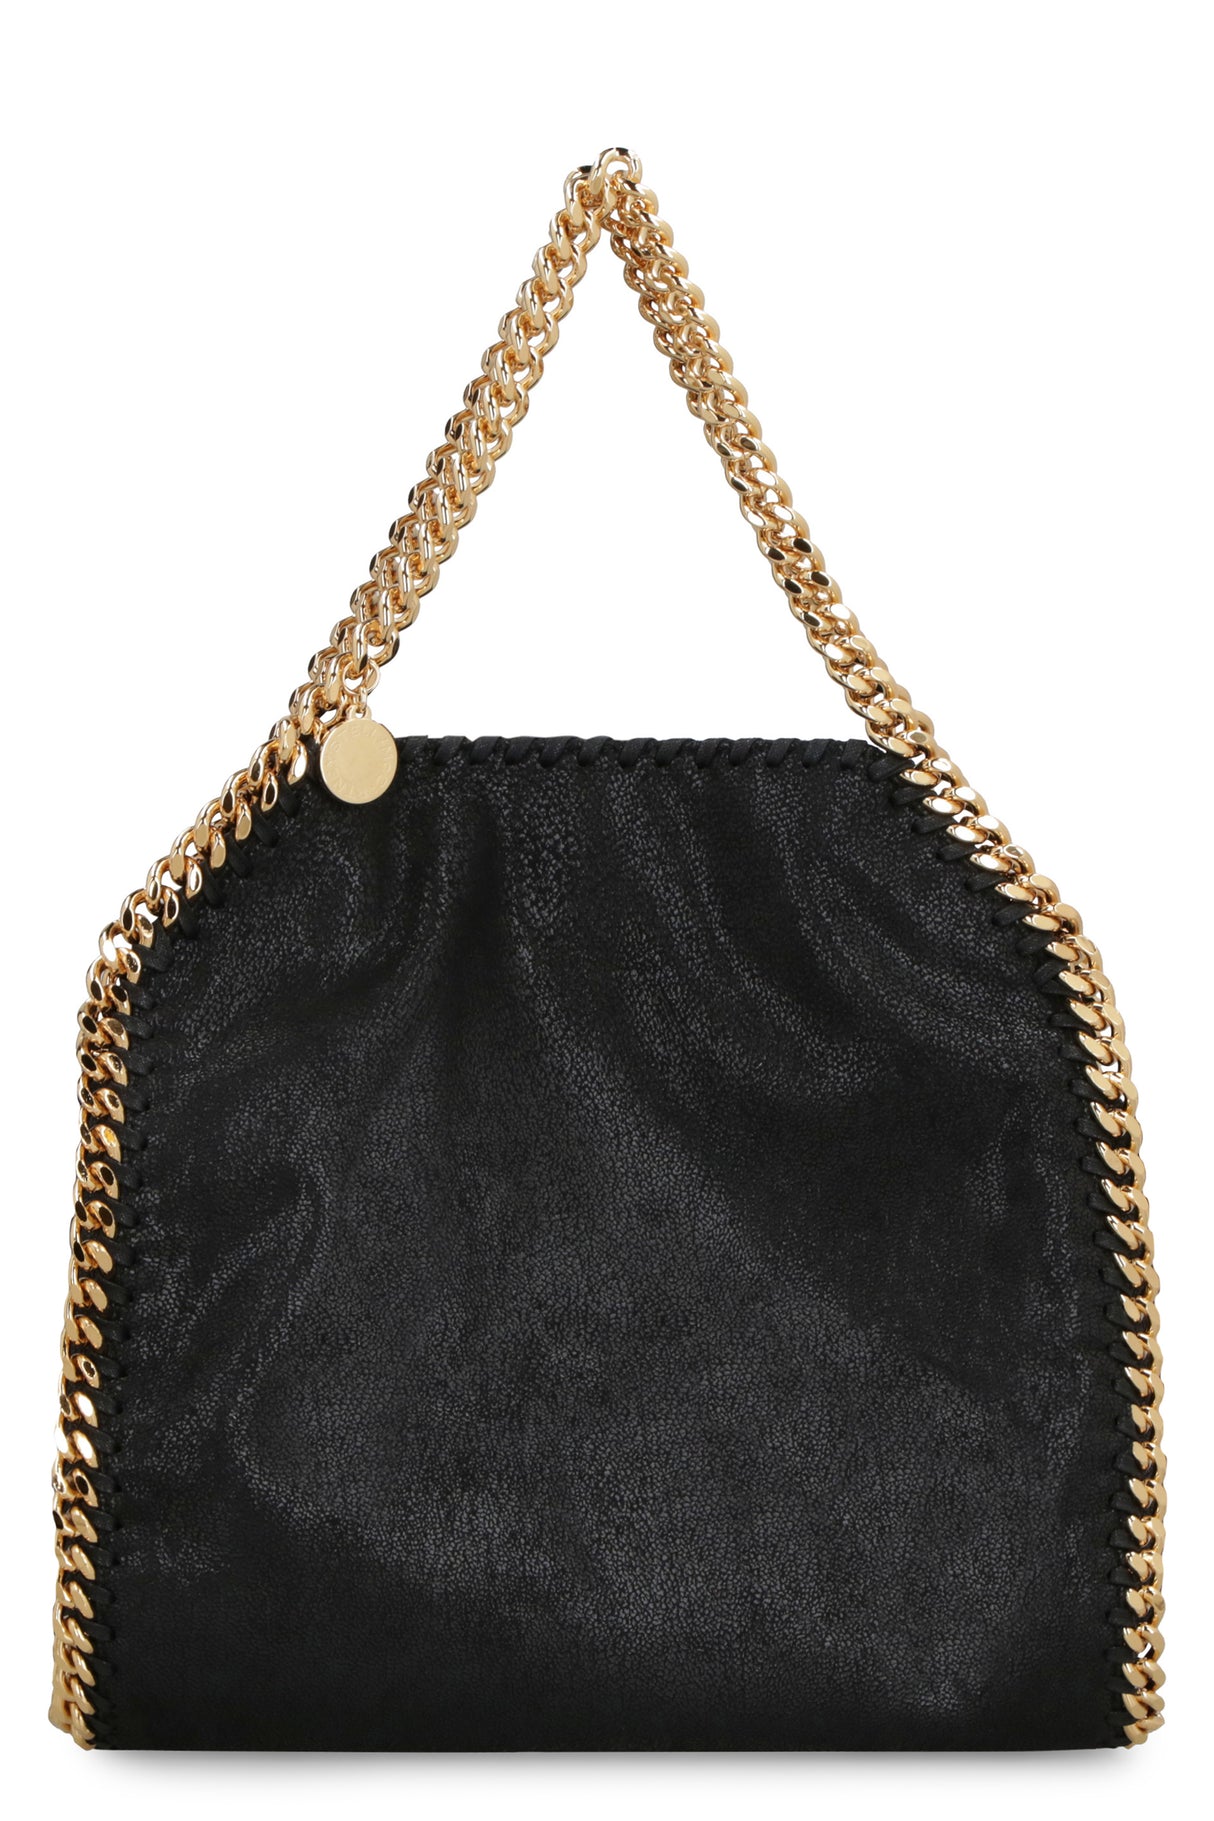 STELLA MCCARTNEY Mini Falabella Tote Handbag in Black Shaggy Deer Fabric with Chain Strap